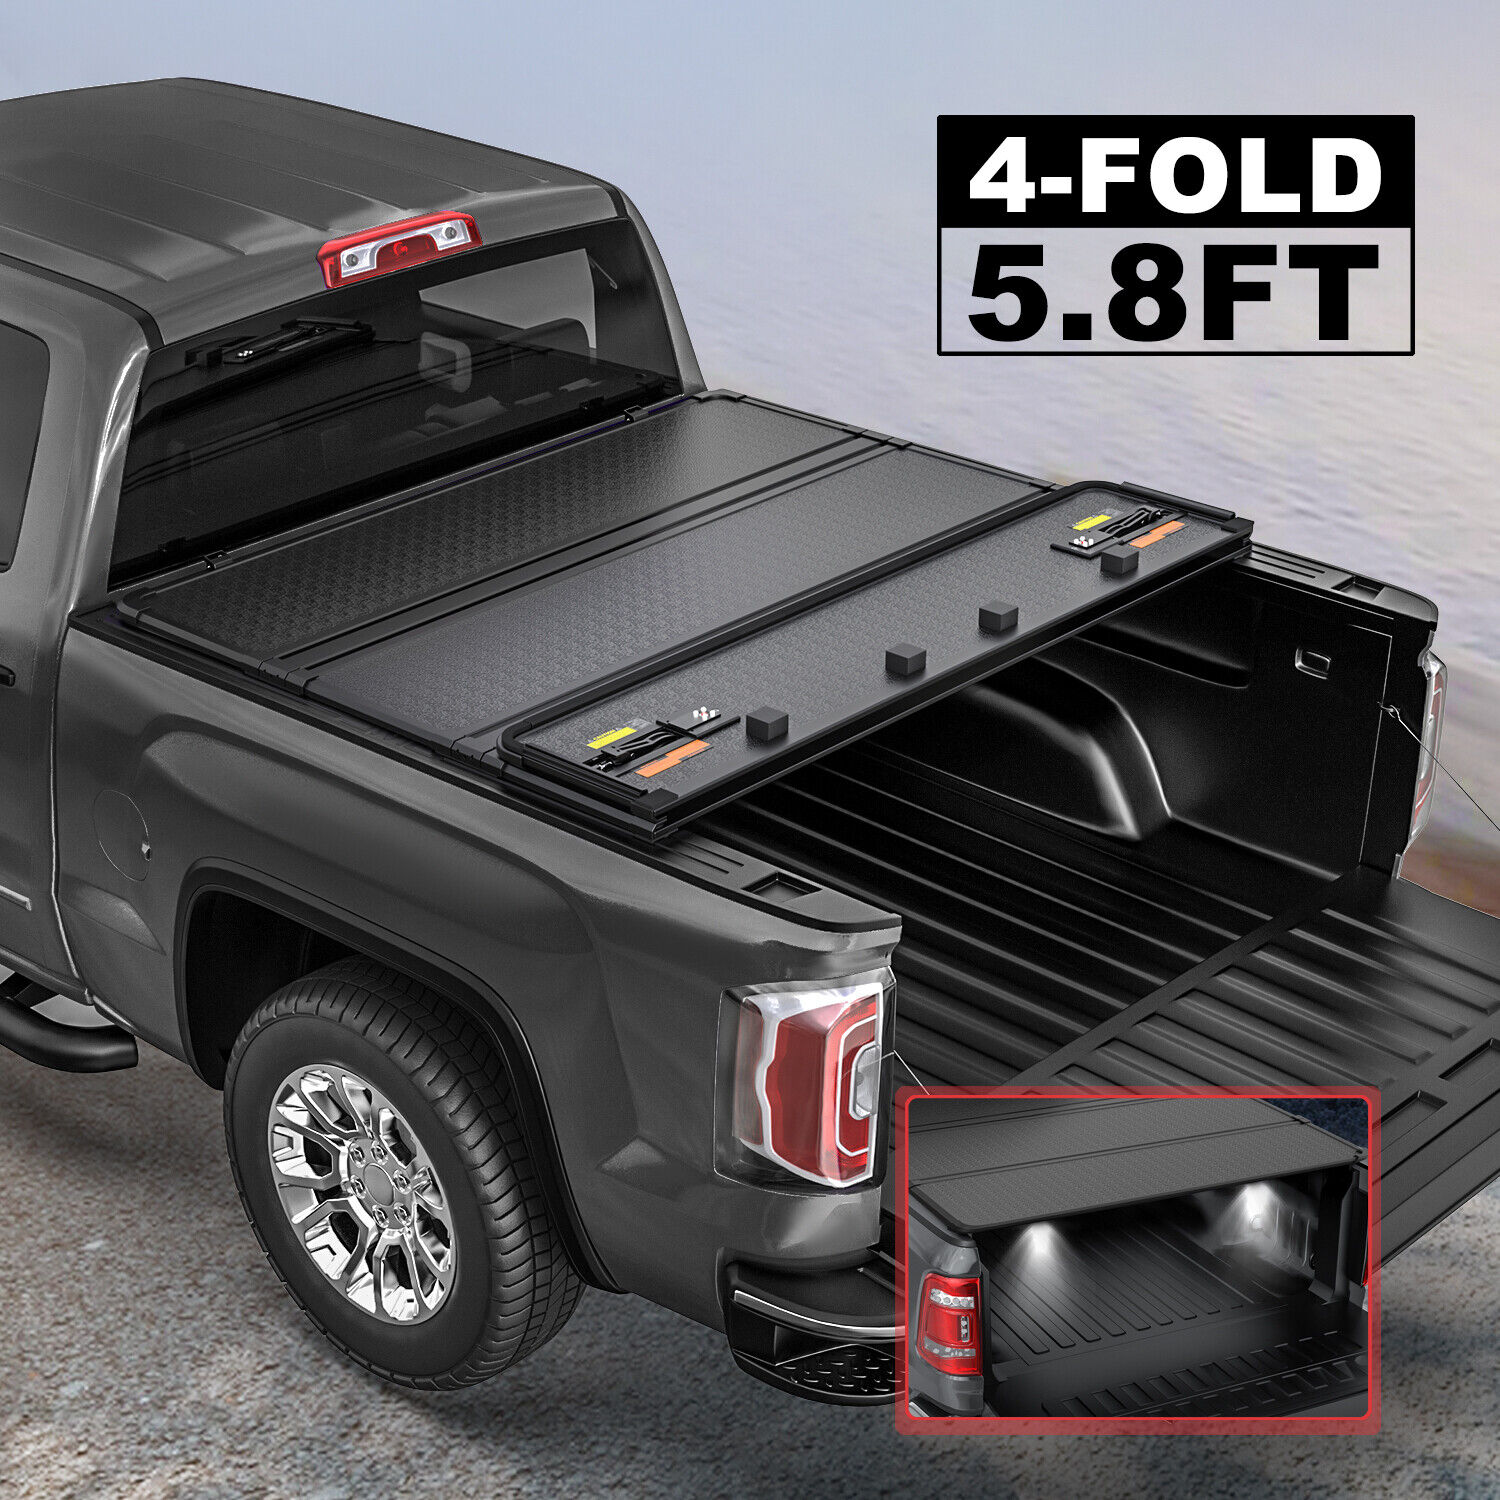 5.8FT Bed Hard Truck Tonneau Cover For 2014-2018 Chevrolet Silverado GMC Sierra